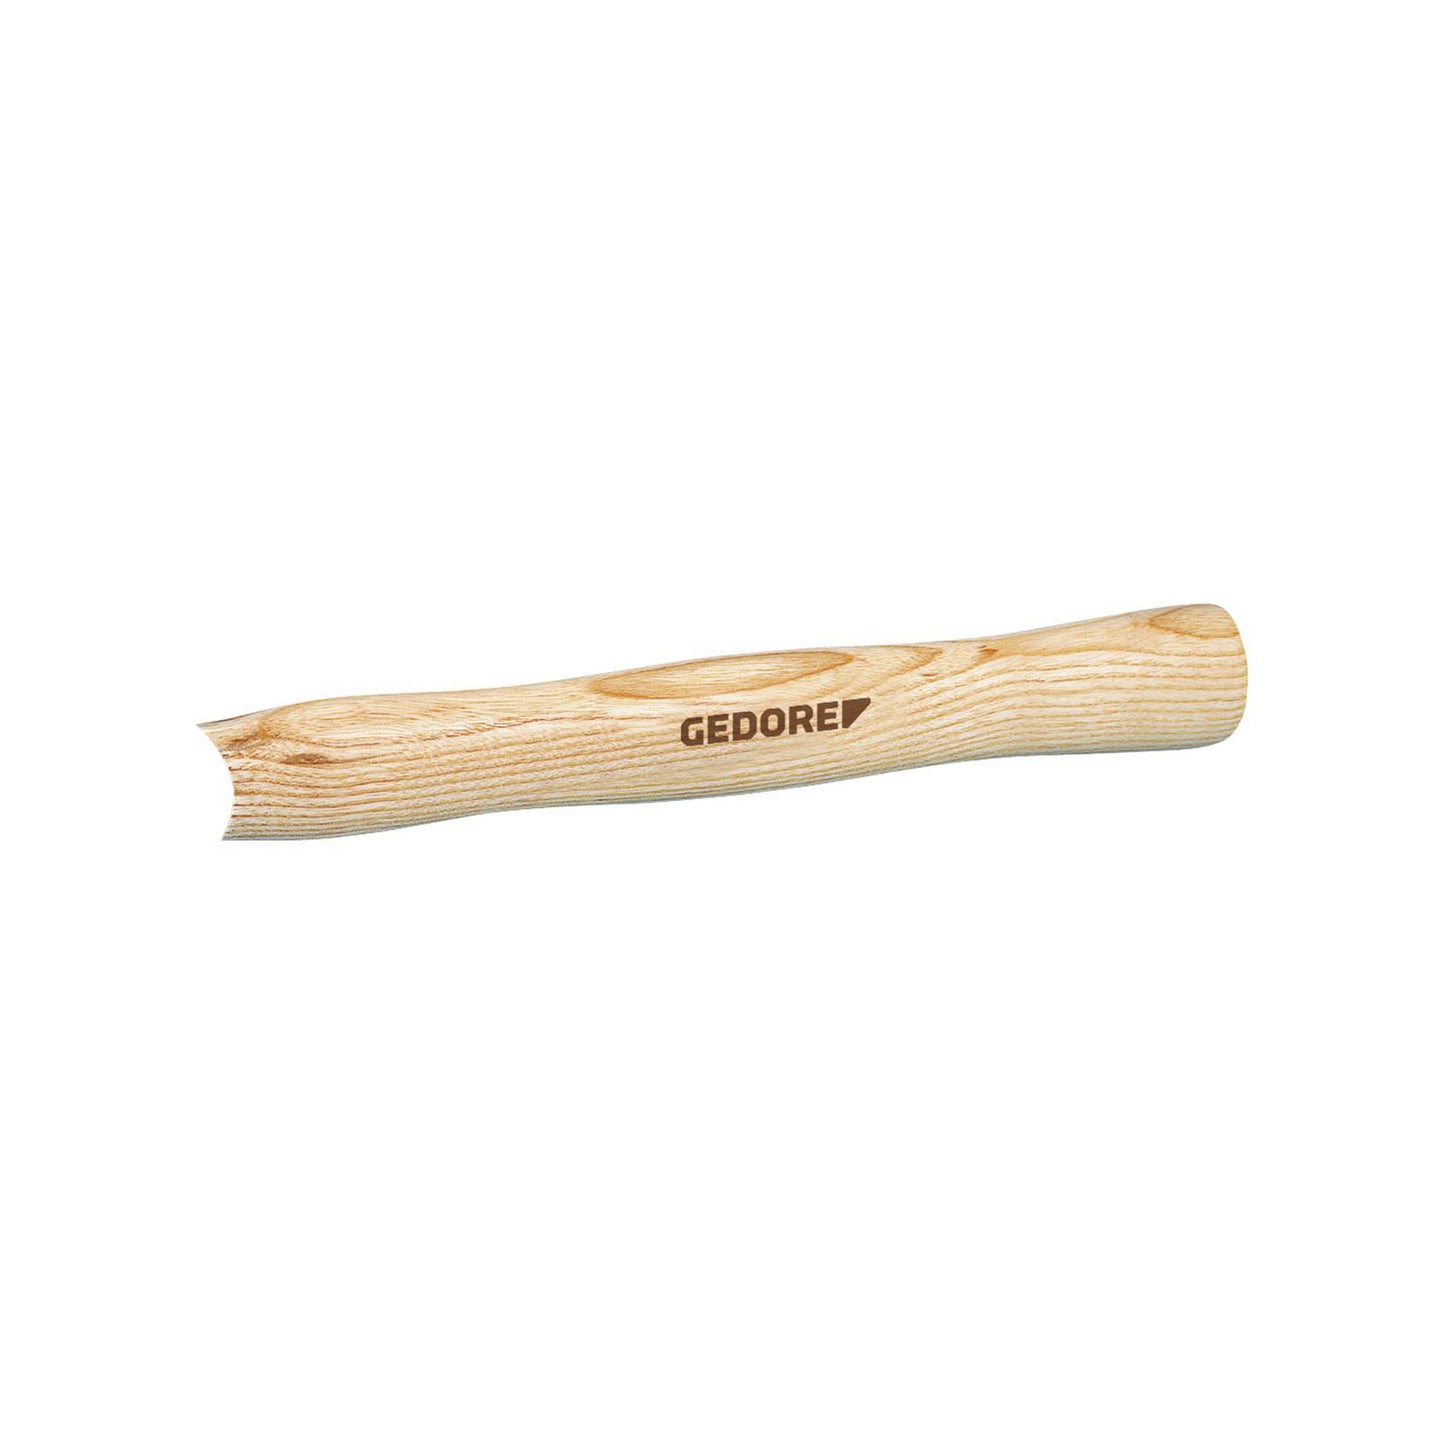 GEDORE E 224 E-40 - Ash replacement handle 32cm (8823720)